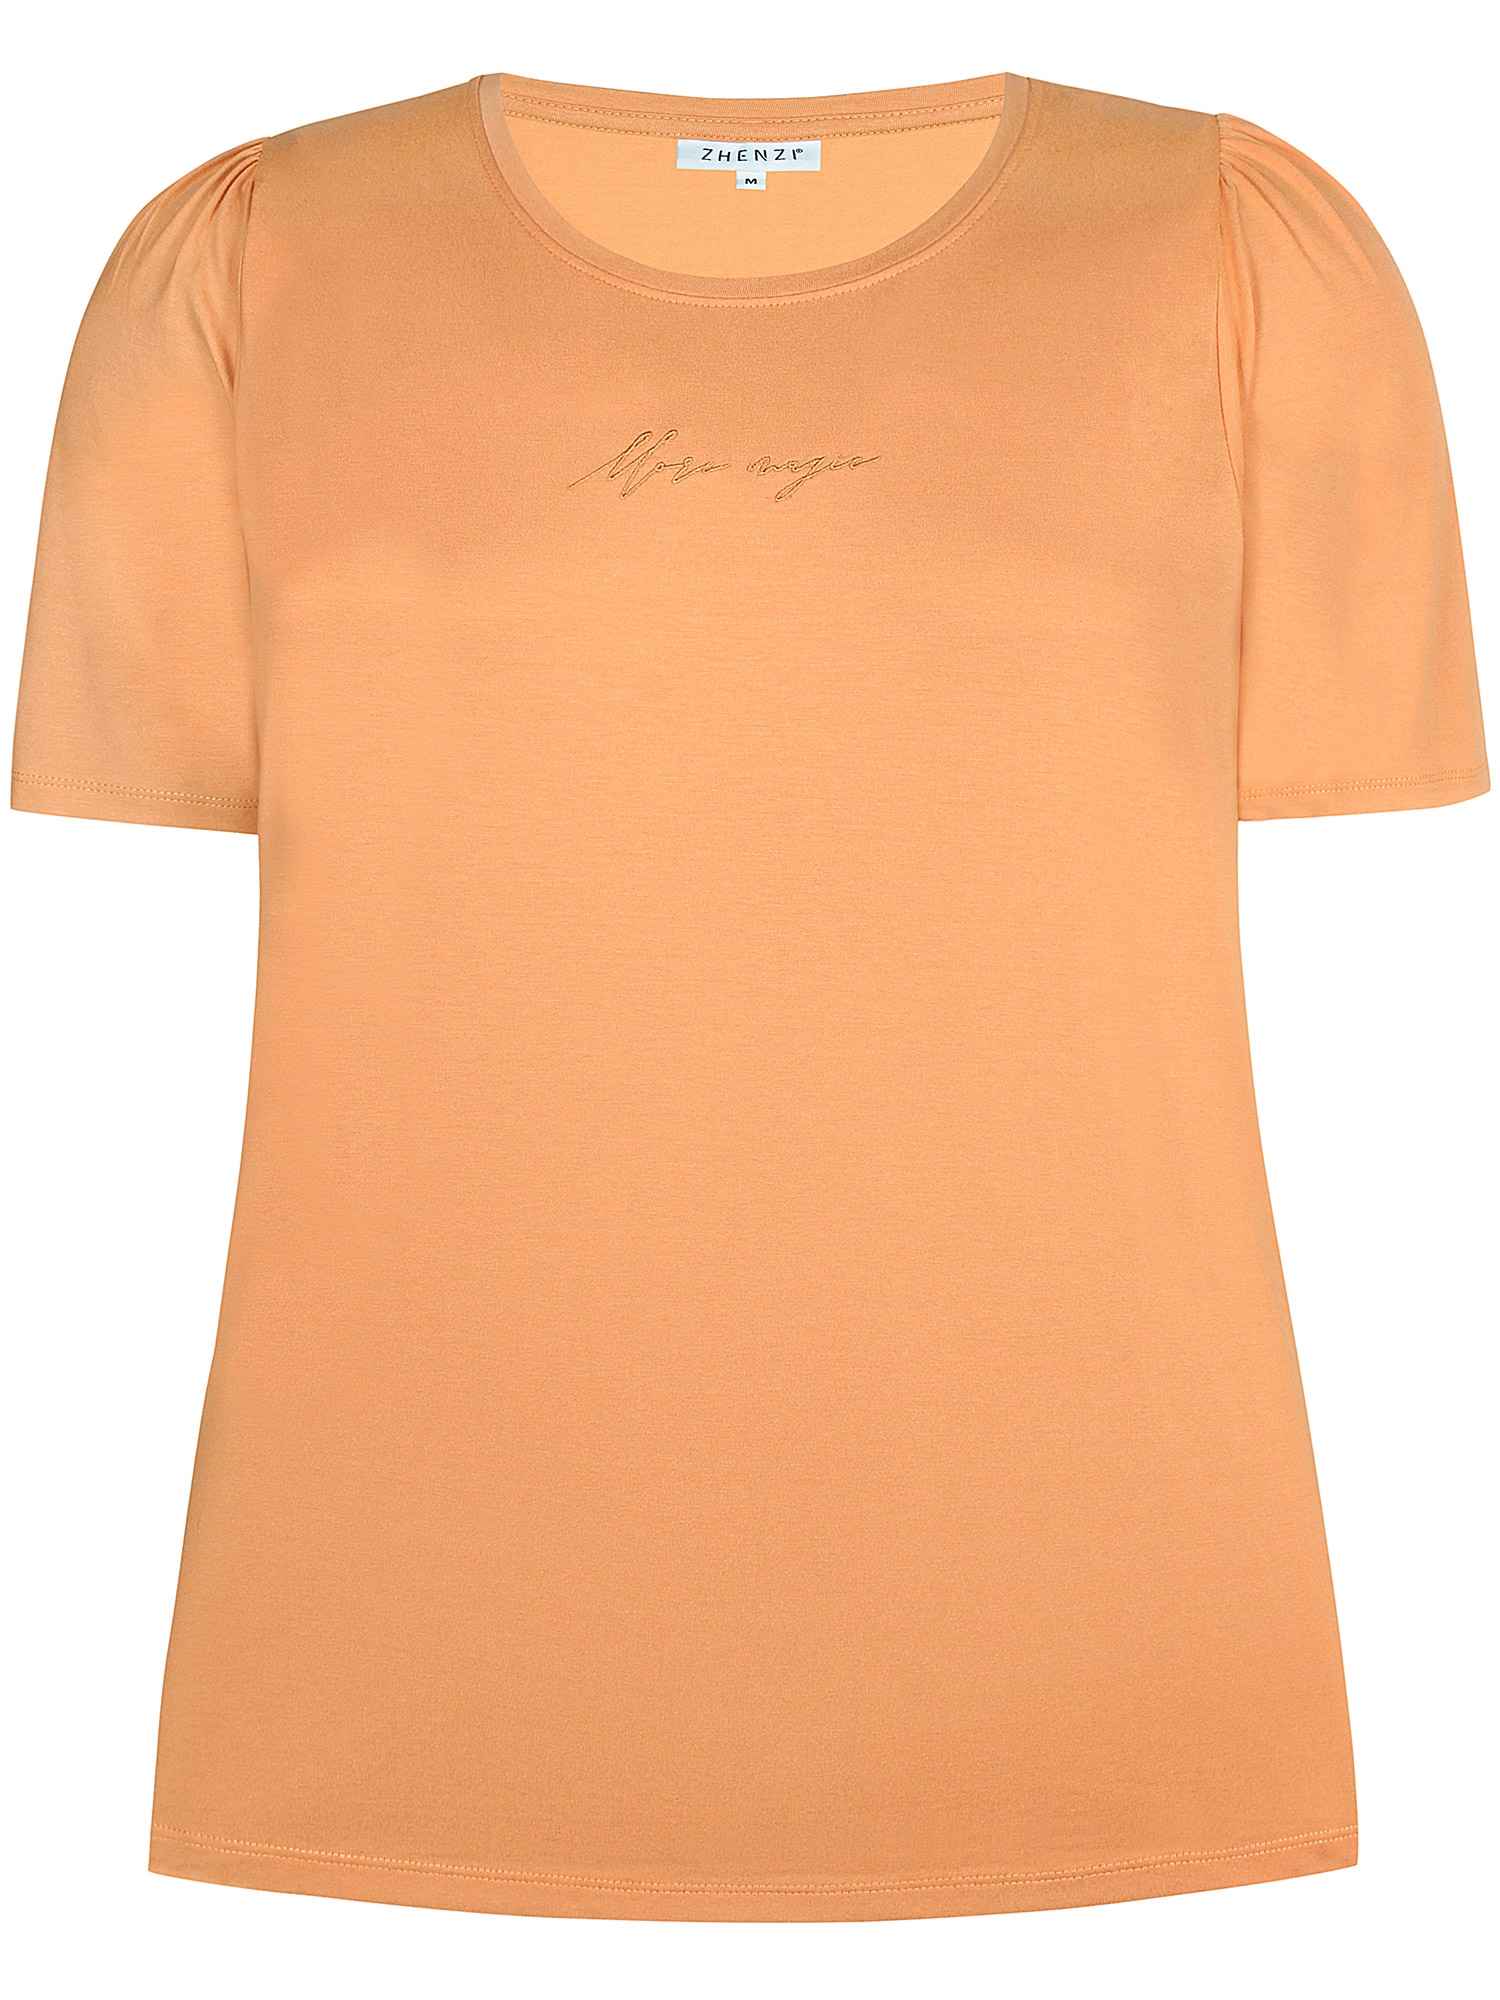 CARLEE - Orange t-shirt i viskose jersey med lille broderi fra Zhenzi